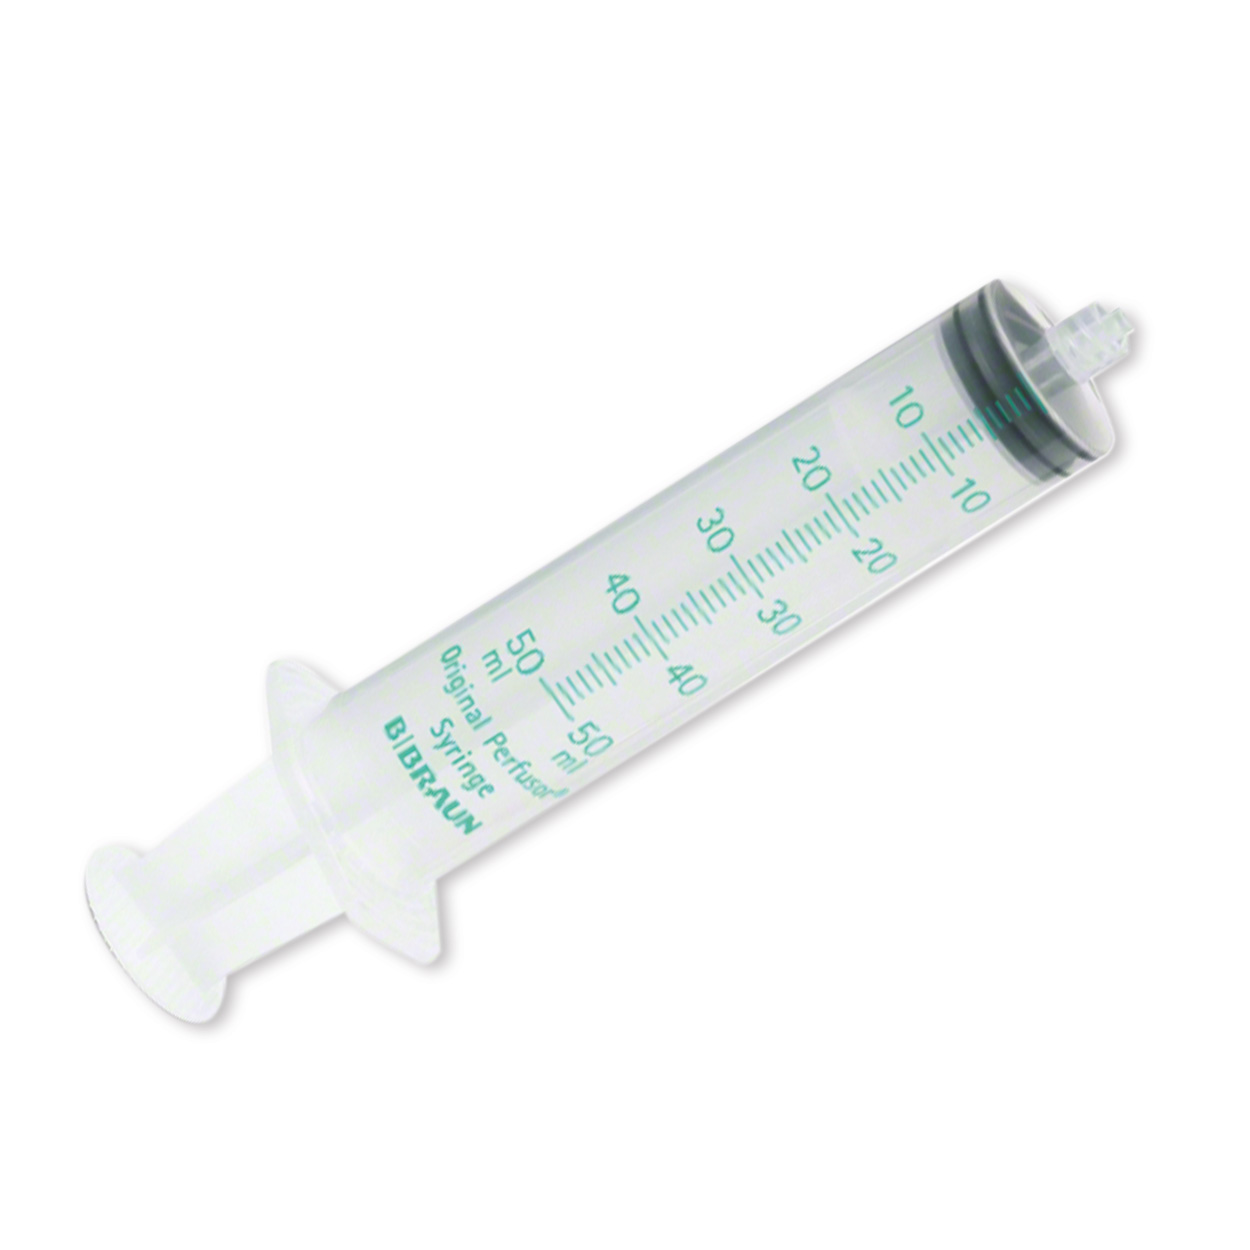 Perfusor Spritze 50 ml LL ohne Aspirationskanüle - Packung à 100 Stück